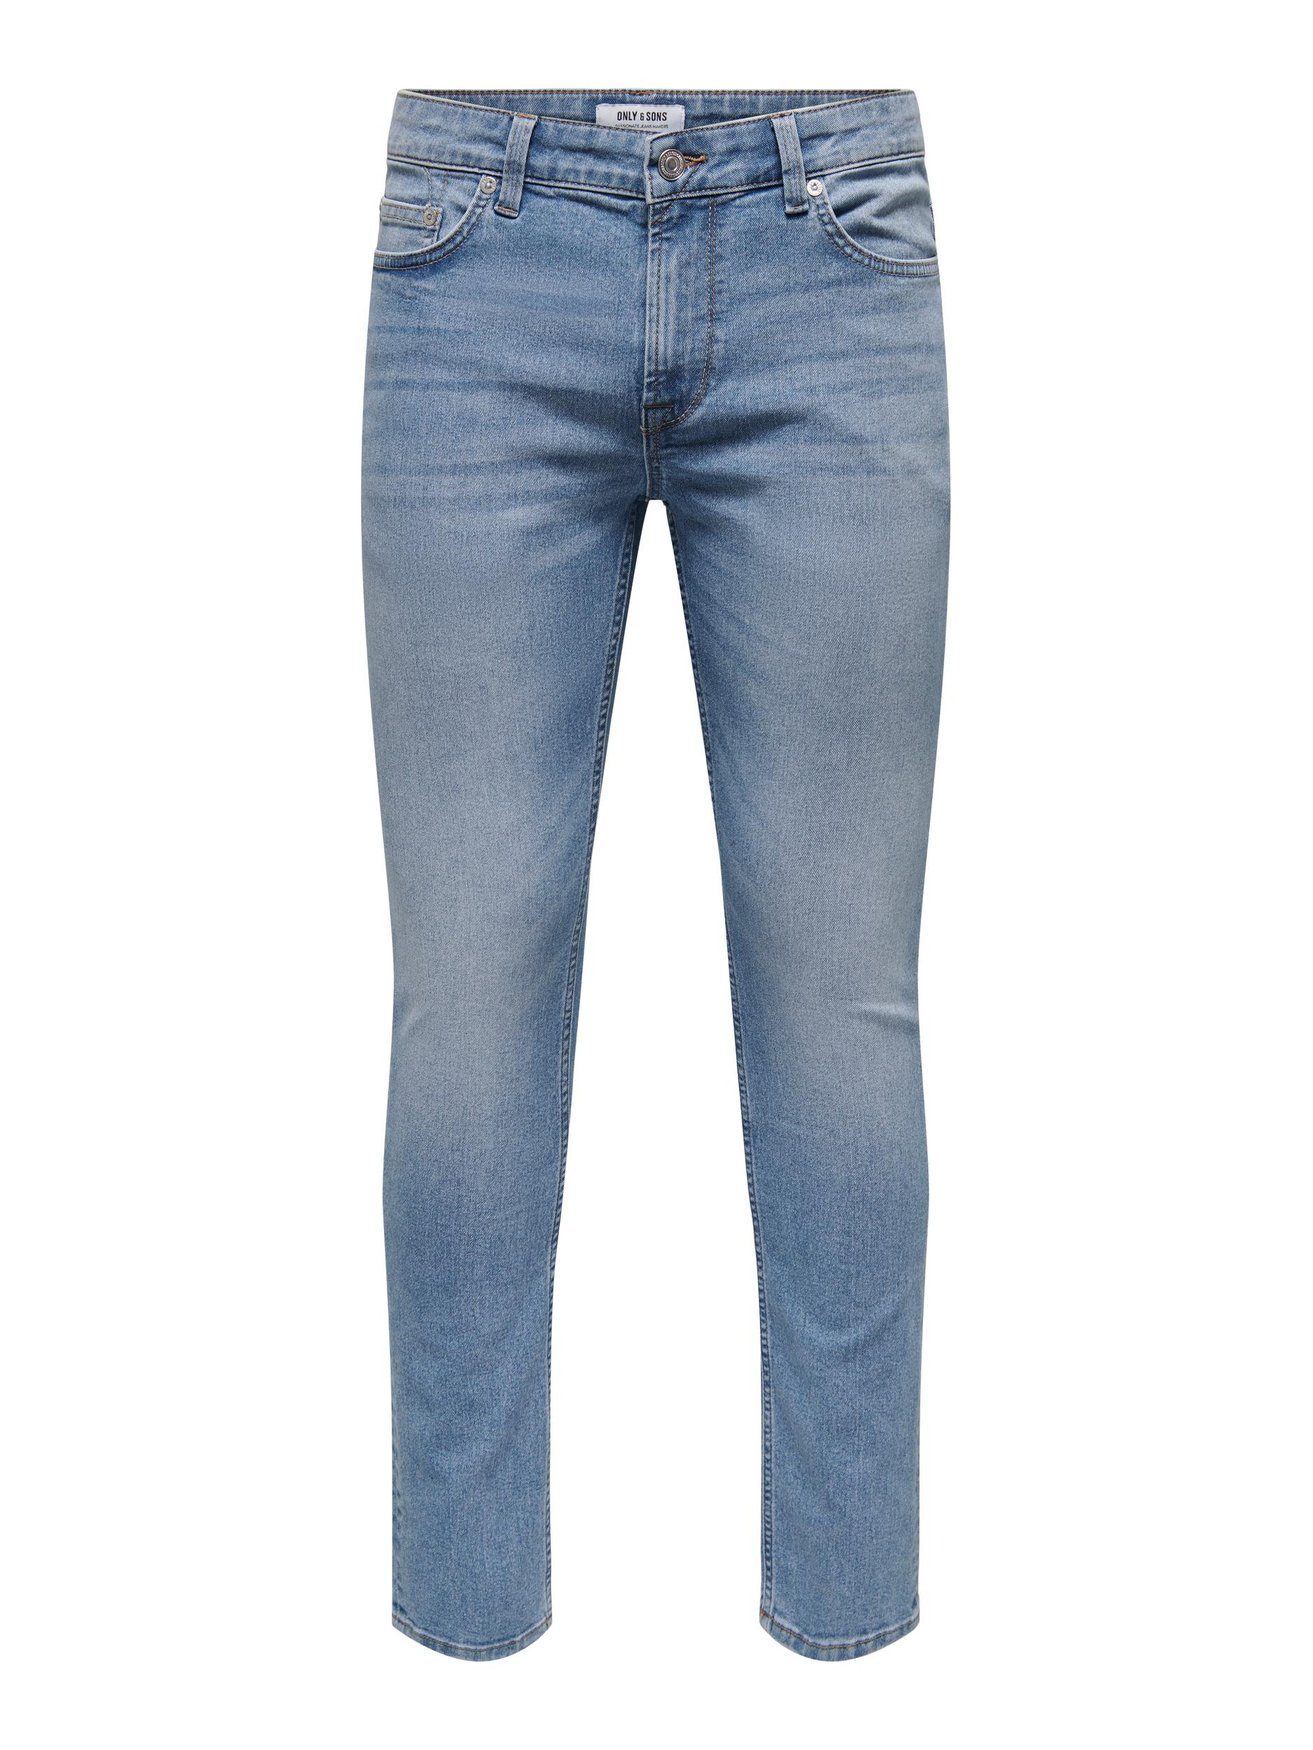 ONLY & SONS Slim-fit-Jeans Slim Fit Jeans Basic Hose Stoned Washed Denim Pants ONSLOOM 5615 in Hellblau | Slim-Fit Jeans